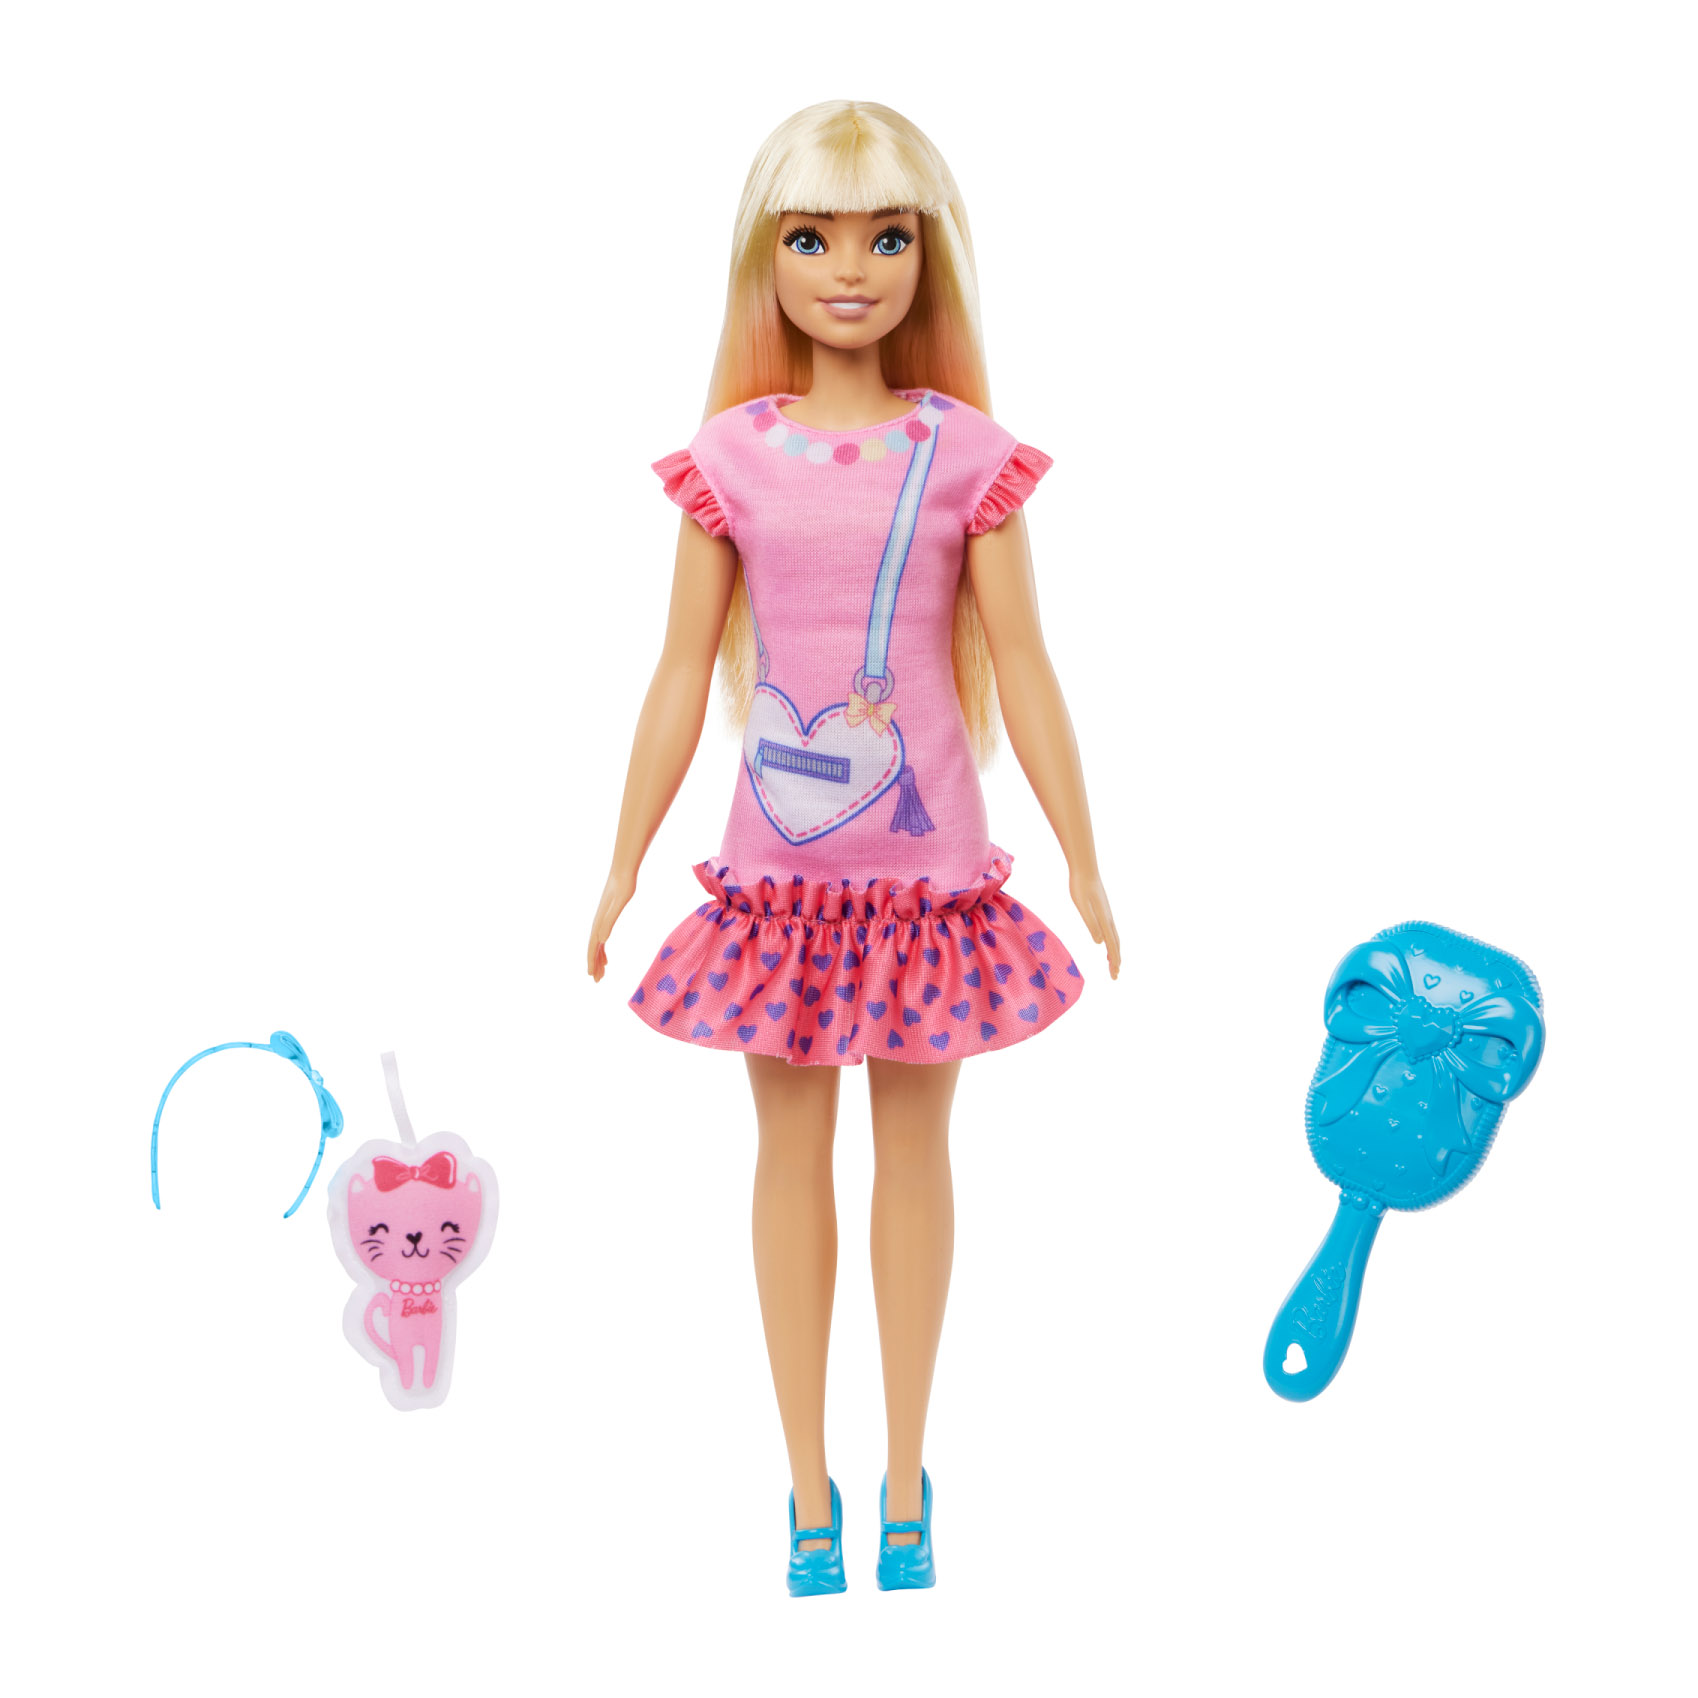 Bambole e playset Barbie in offerta -20%